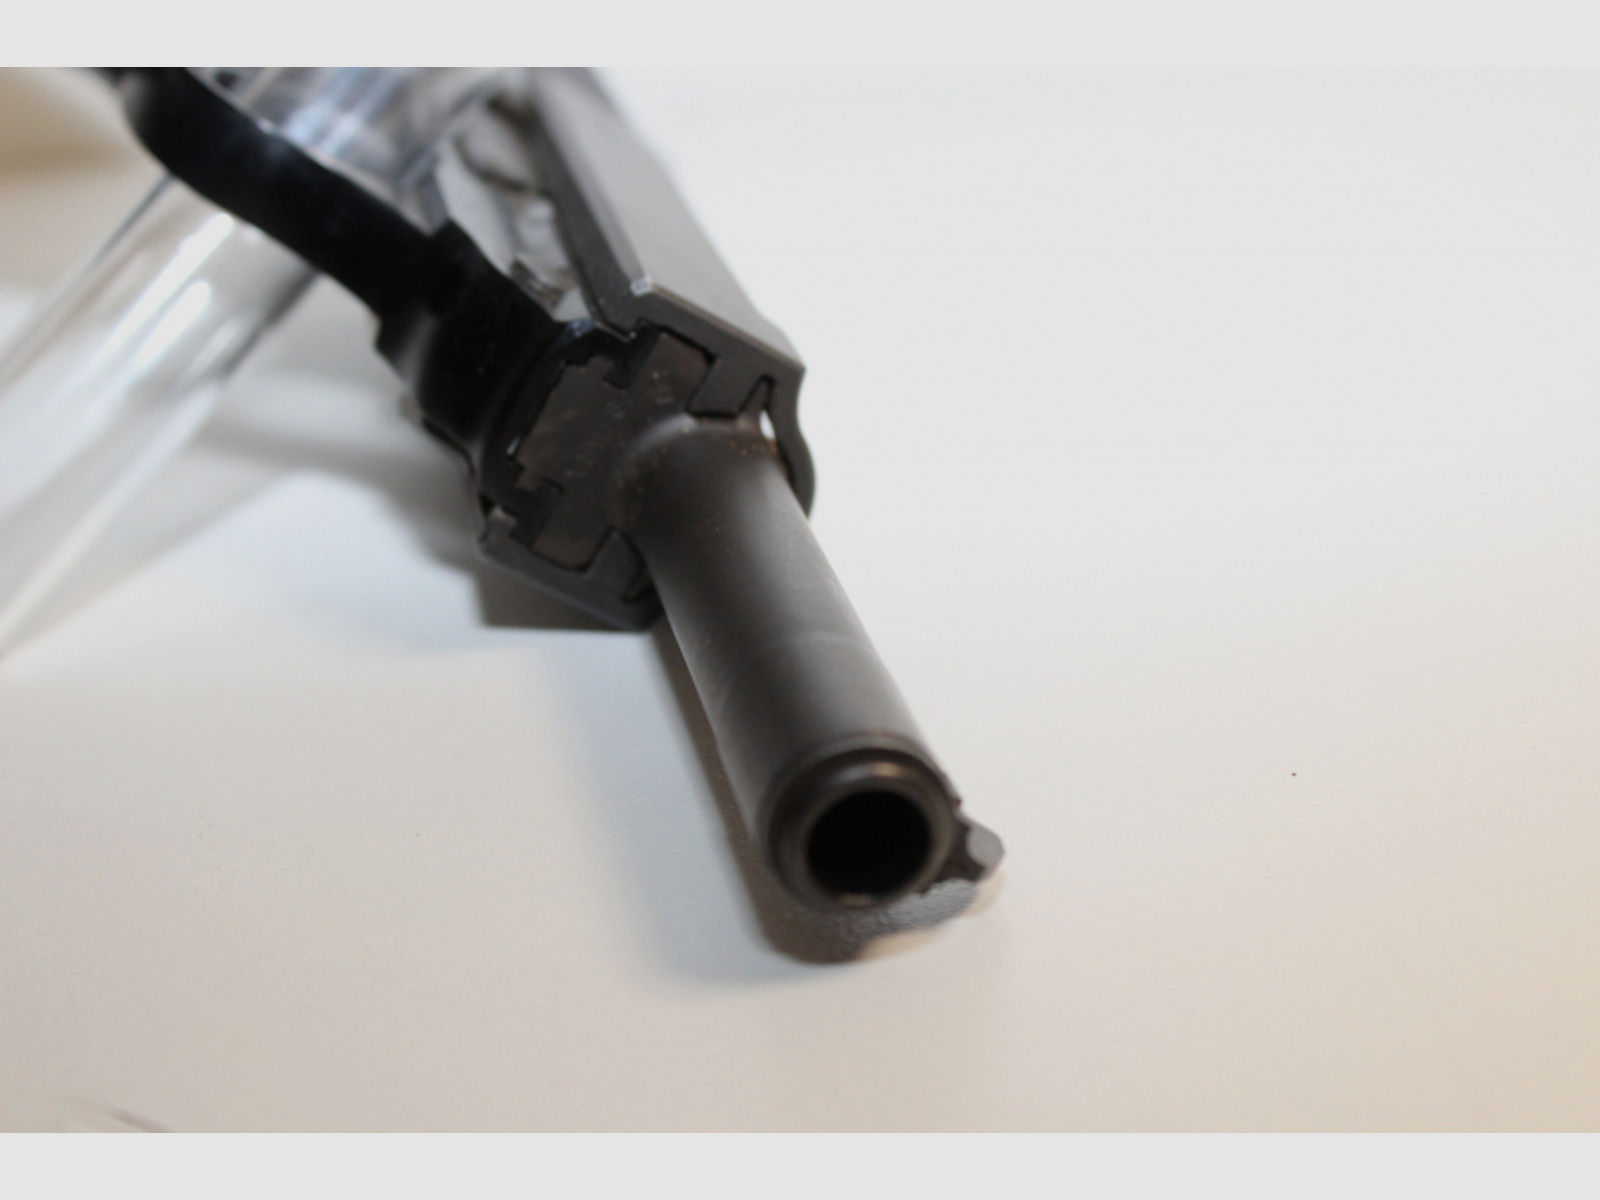 Pistole Carl Walther P38, Kal. 9mm Luger + Tasche/E-Magazin